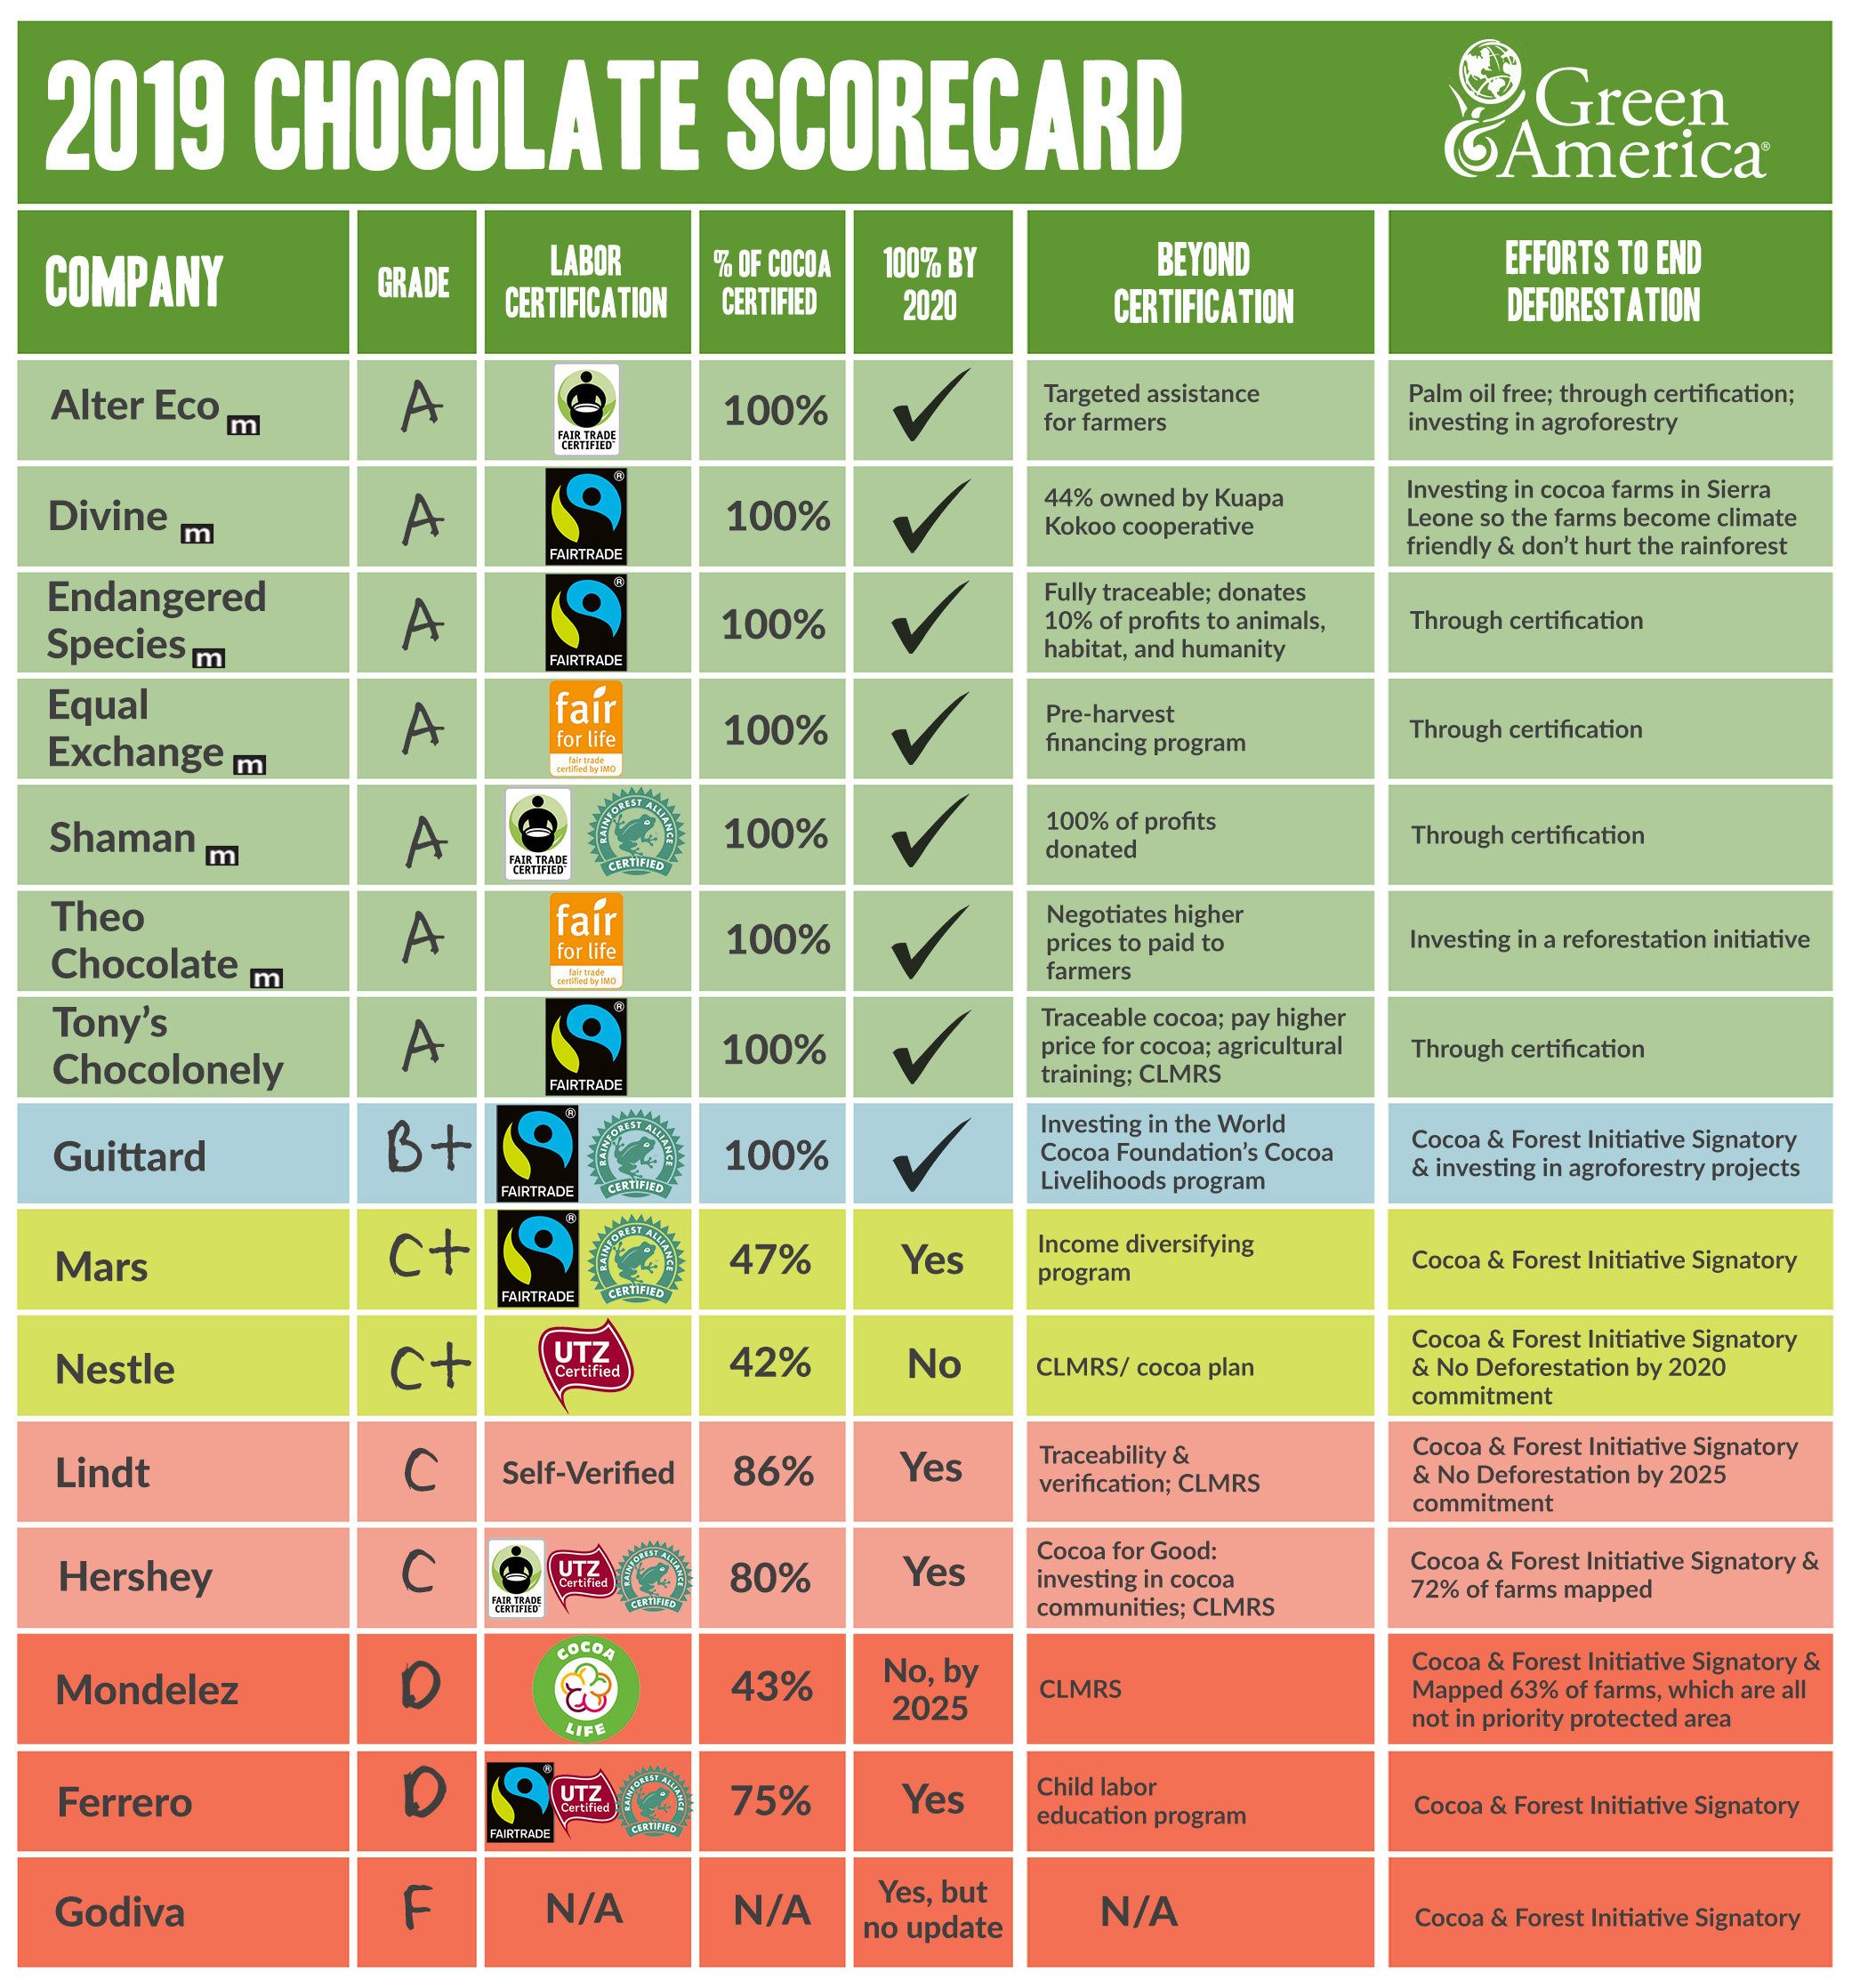 Green America's Chocolate Scorecard